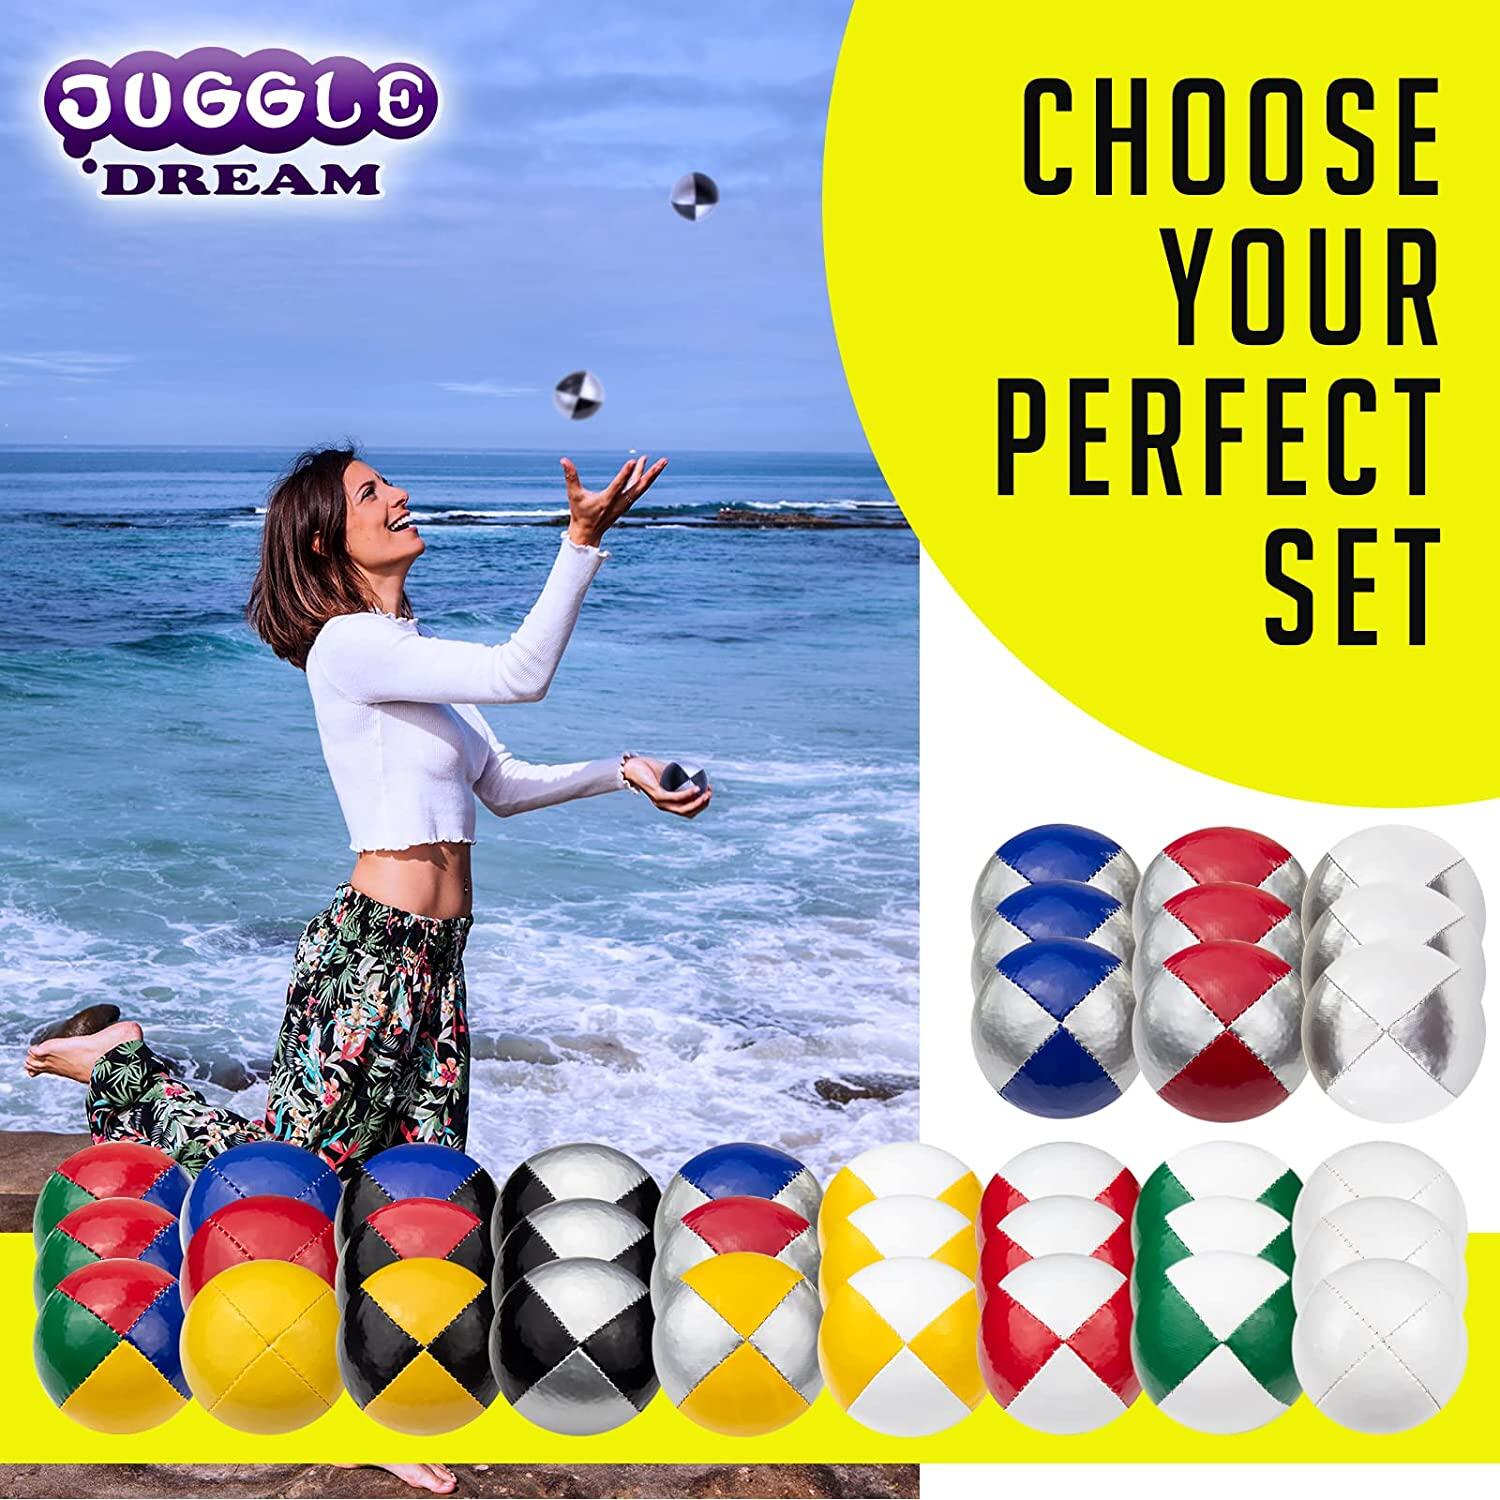 JUGGLE DREAM Juggle Dream 3x Pro Thud Juggling Balls - Set of 3 Professional Juggling Balls w